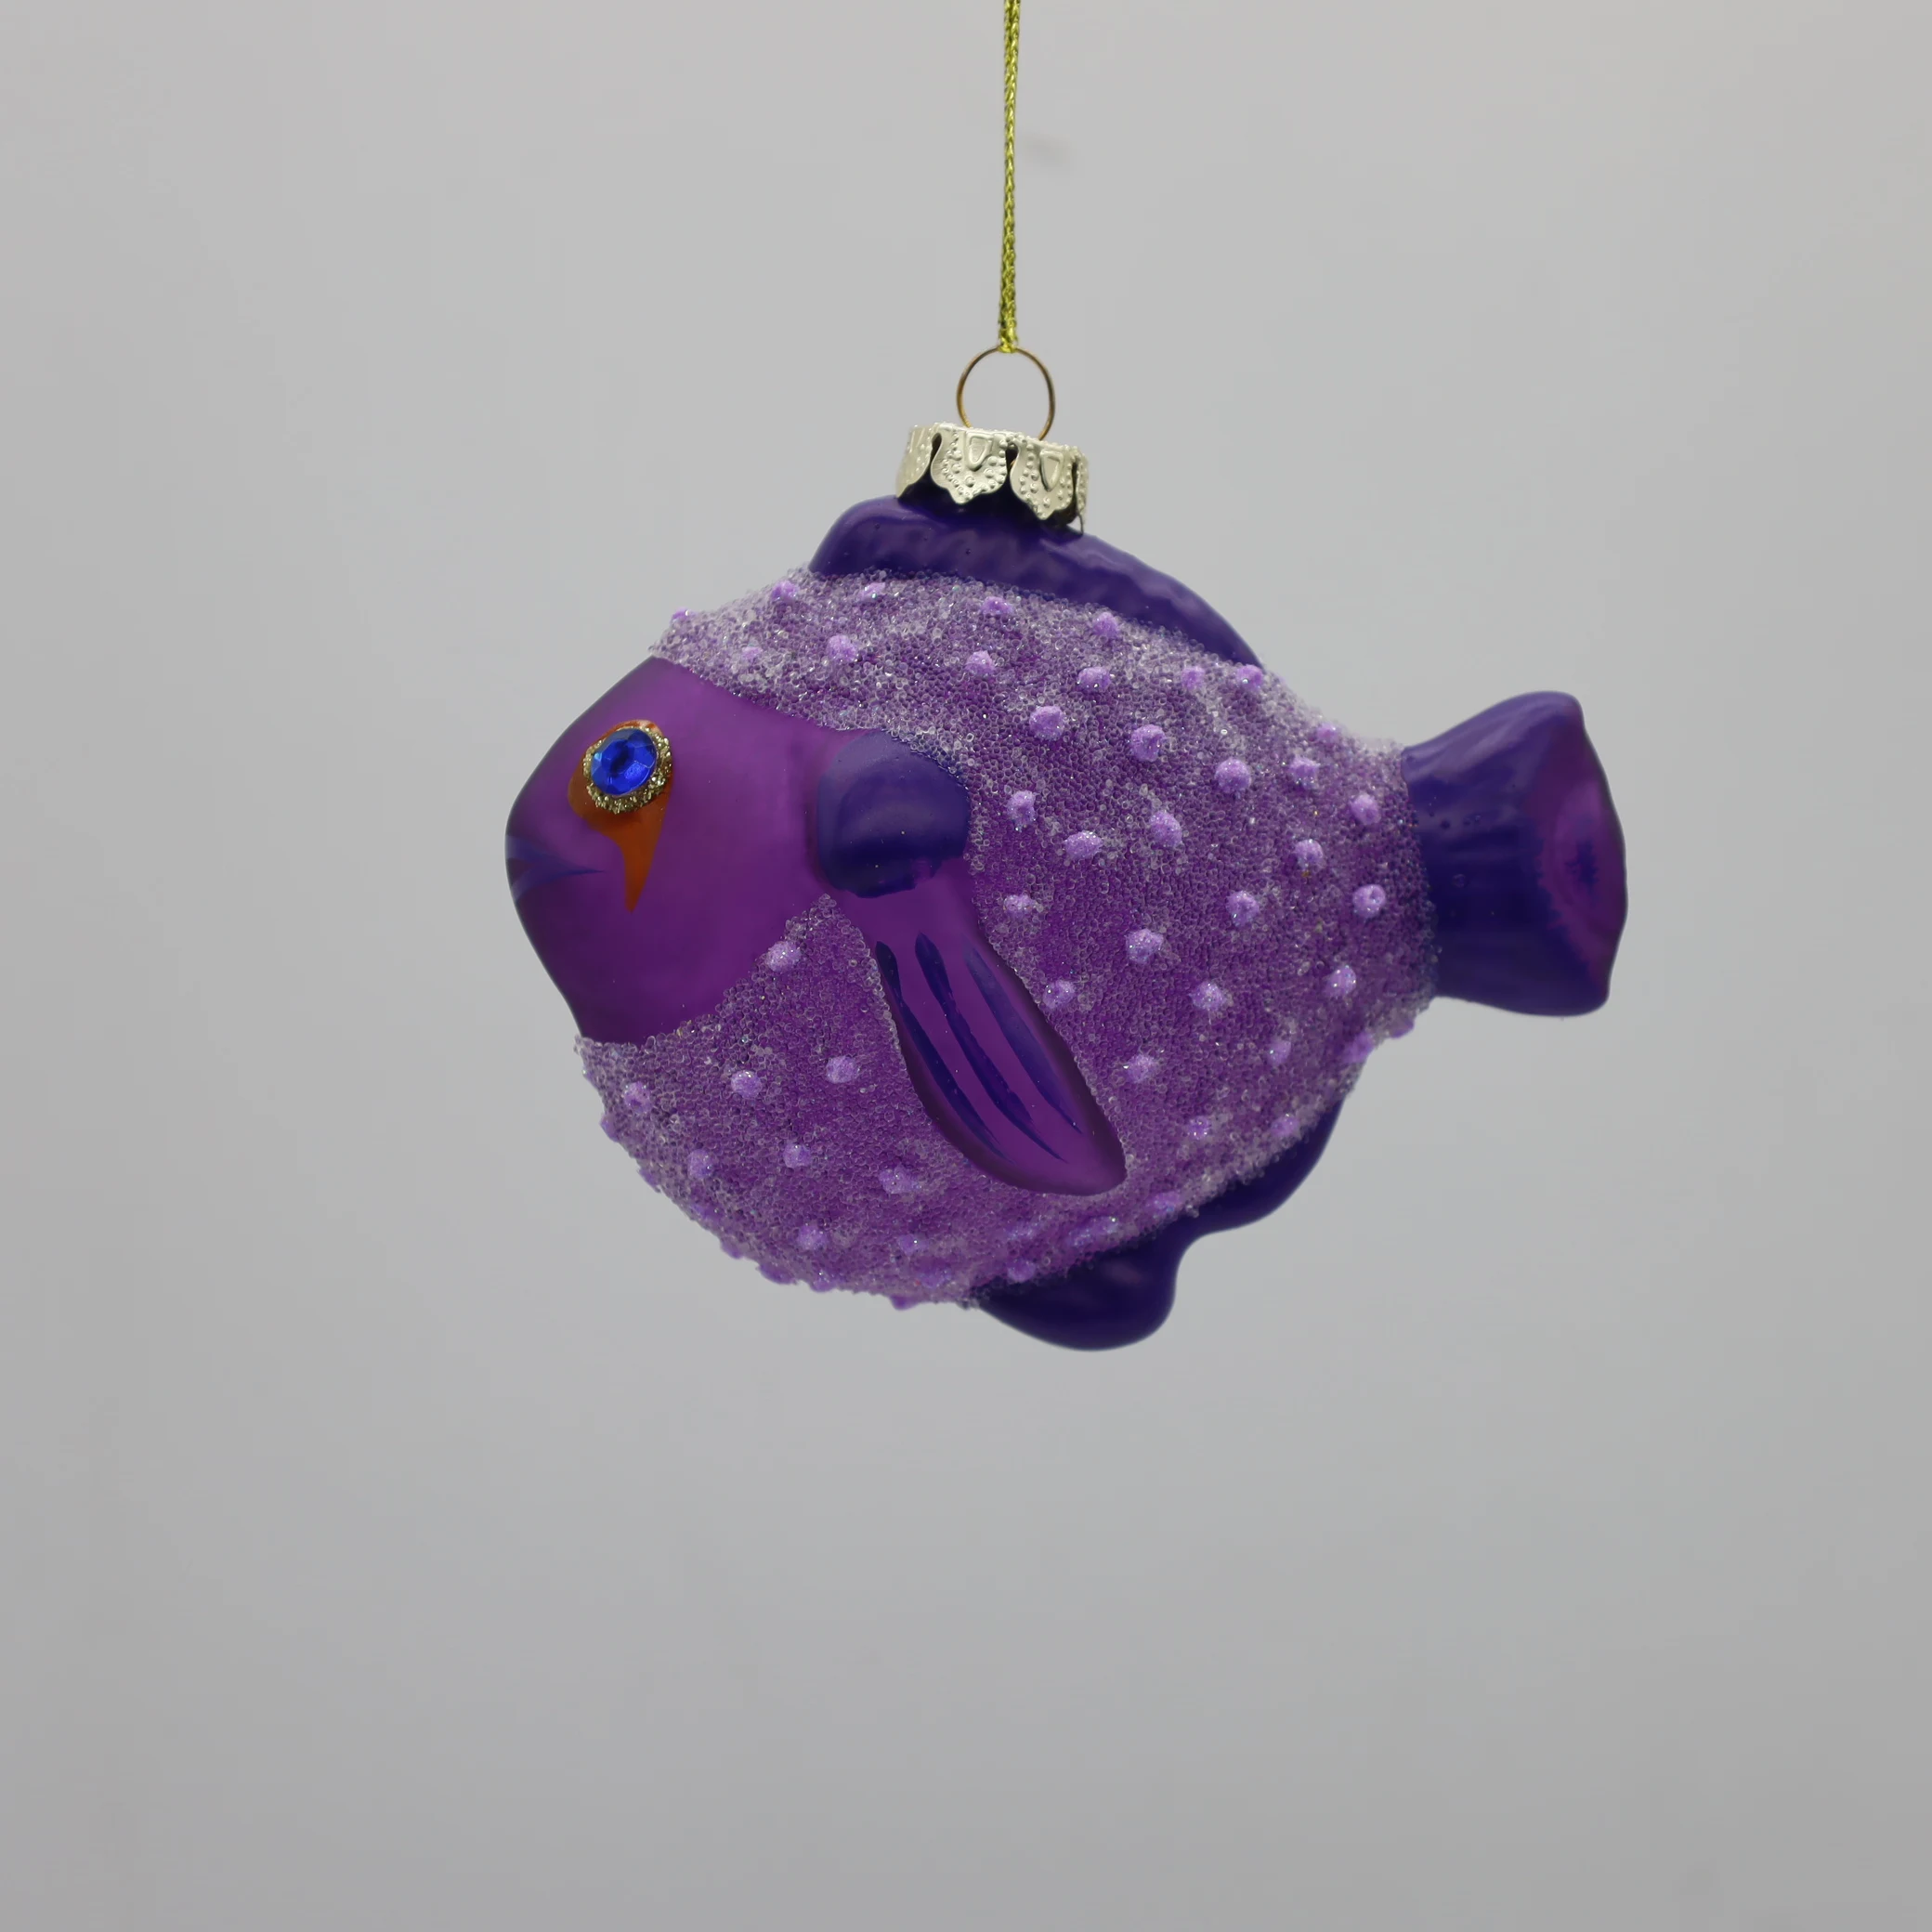 2022 new design fish shaped decorative glass crafts furniture decoration festival celebration decoration